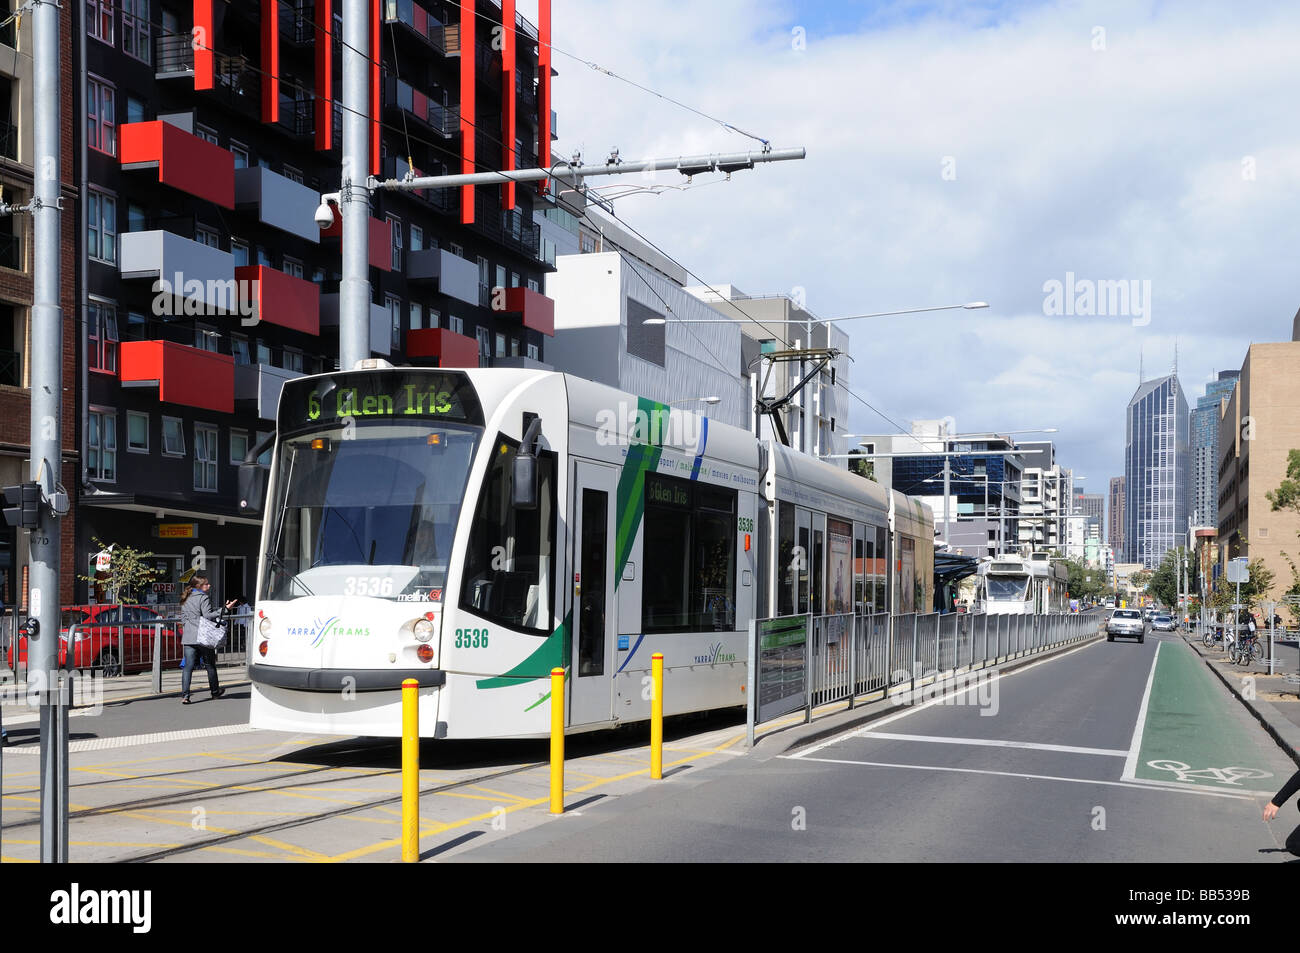 Yarra tram moderne et les bâtiments modernes sur Swanston Street Melbourne, Australie Banque D'Images